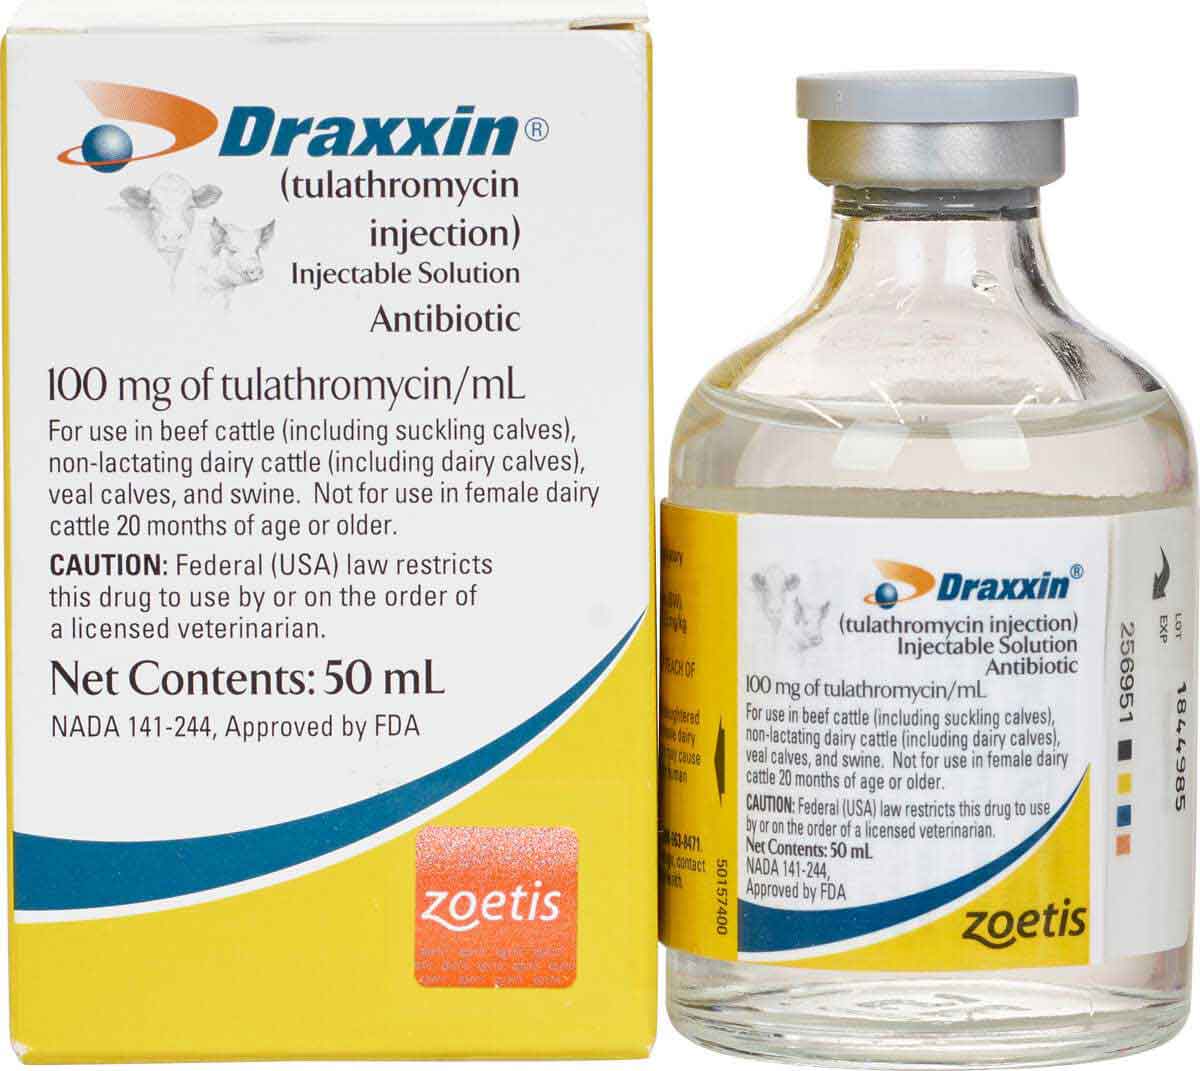 draxxin-tulathromycin-for-cattle-and-swine-zoetis-animal-health-safe